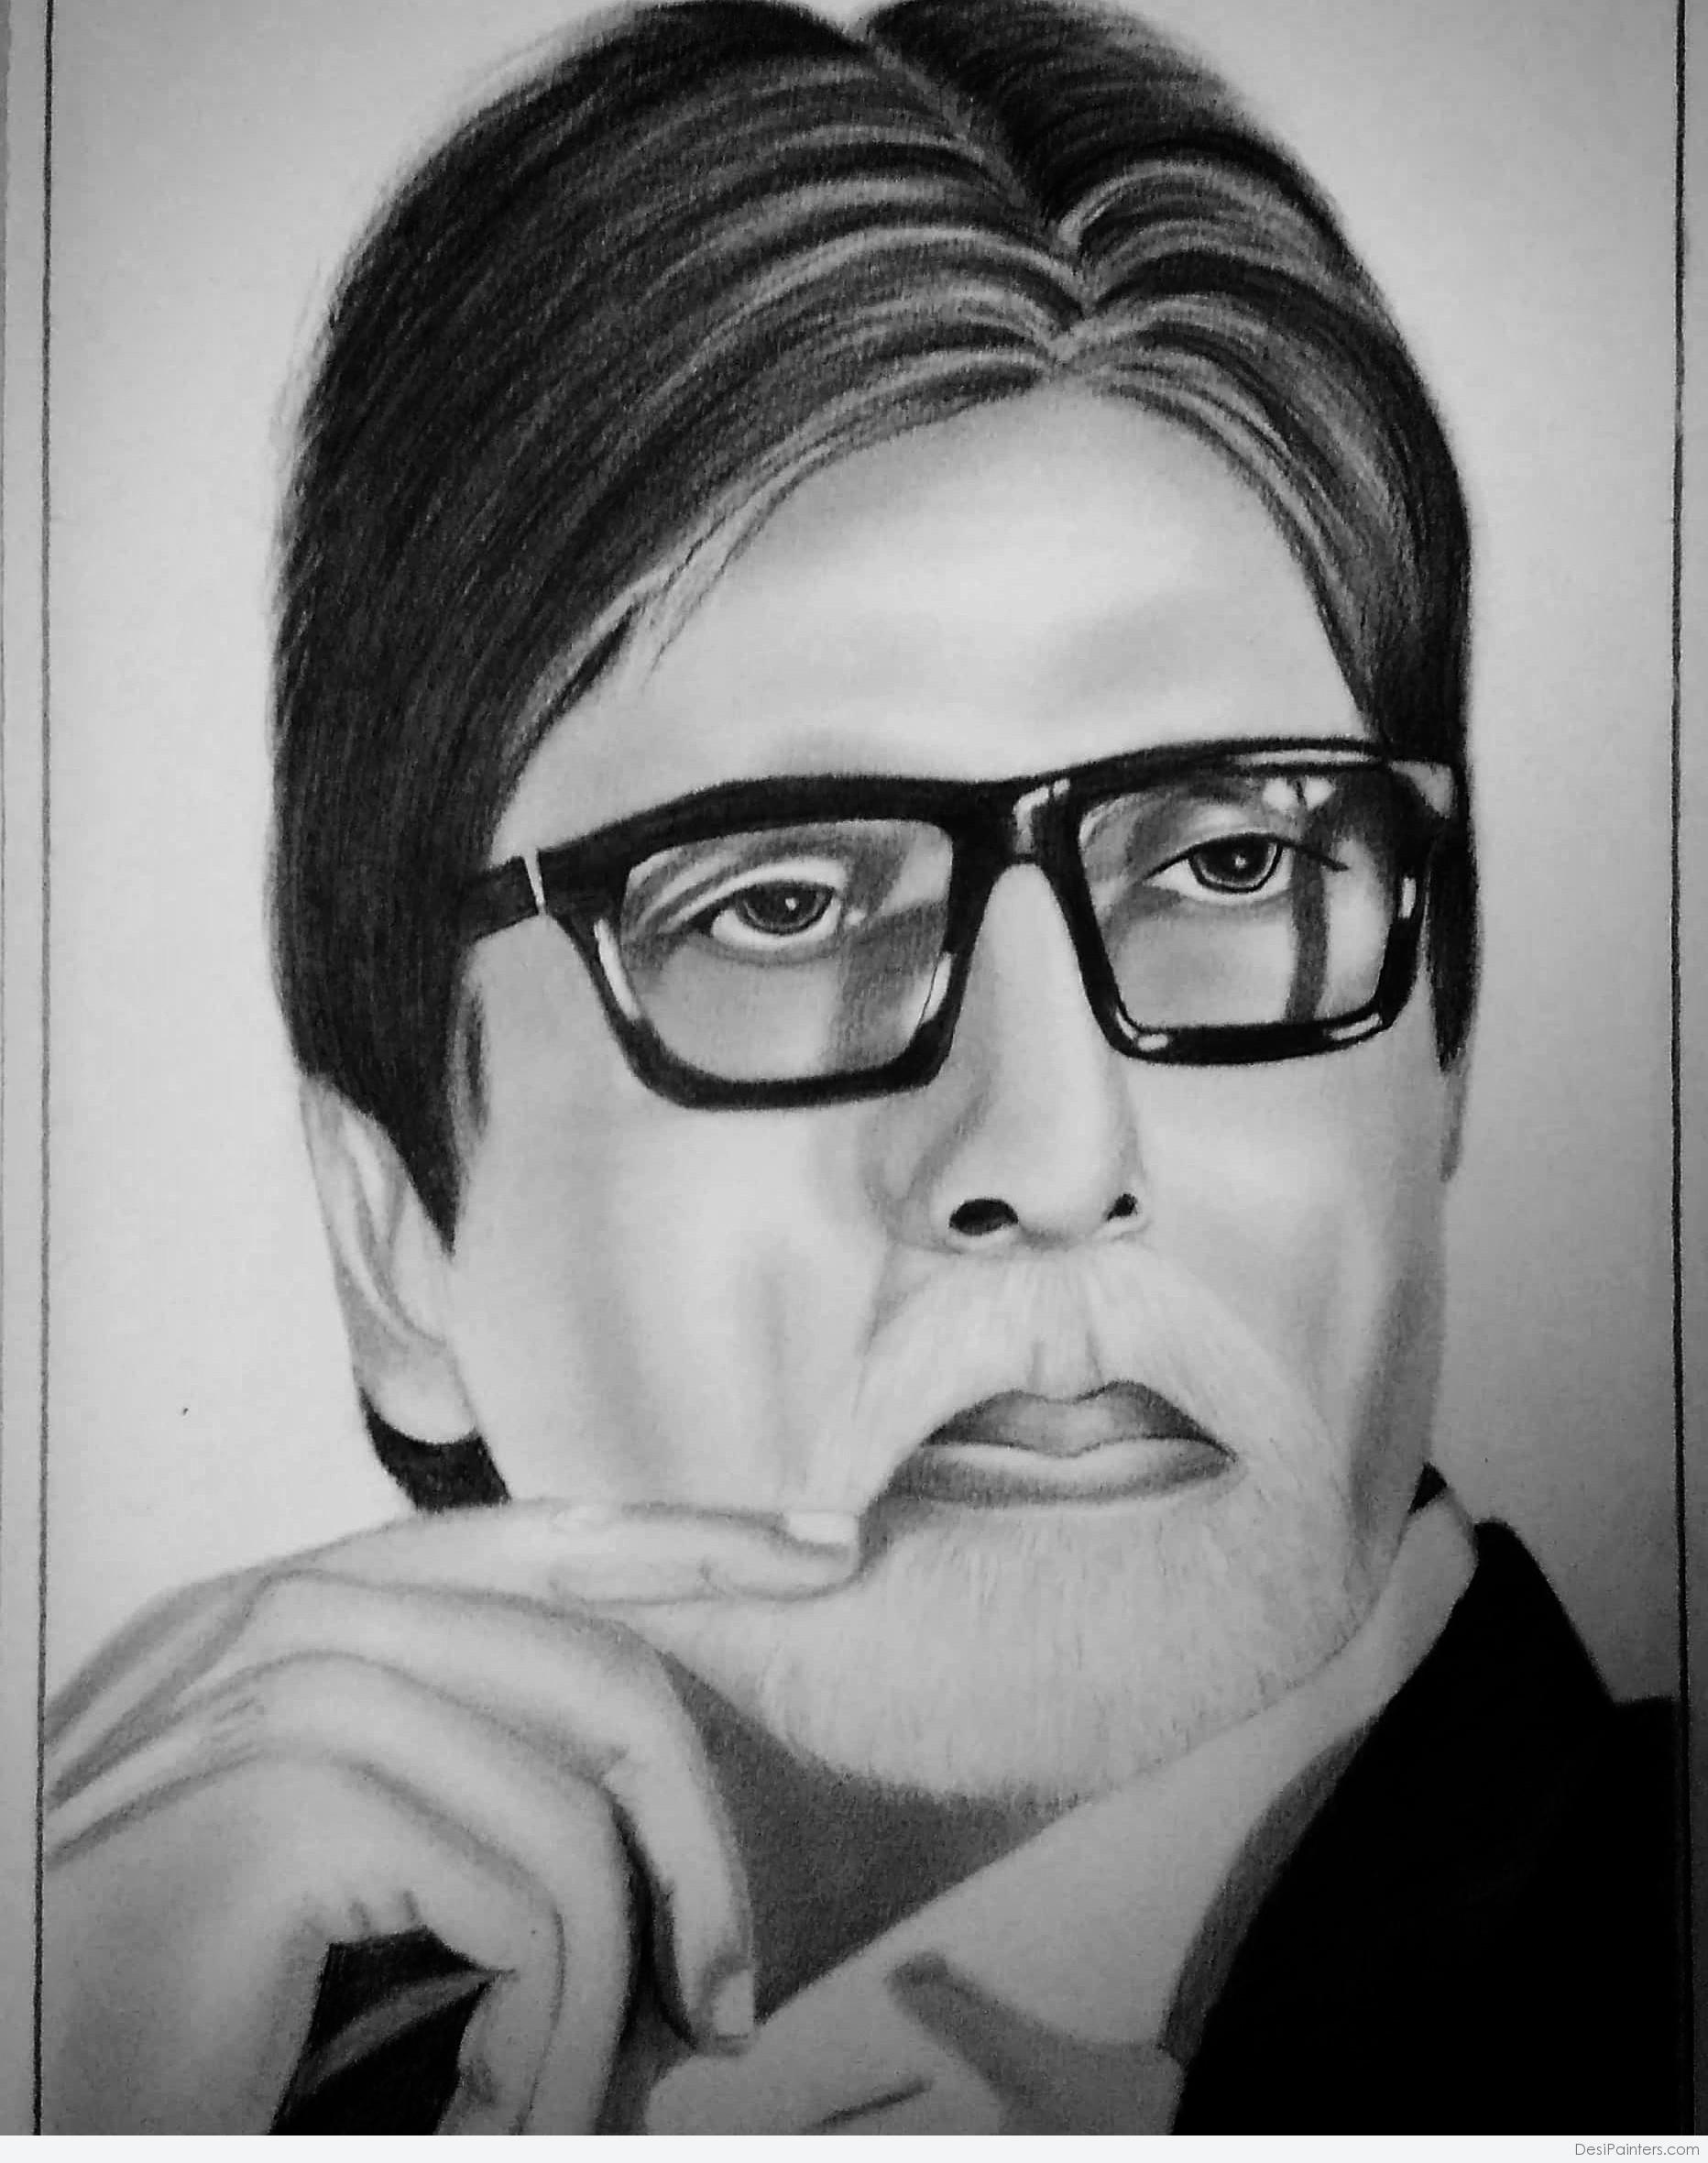 Amitabh Bachchan Sketch by DipeshArt on DeviantArt